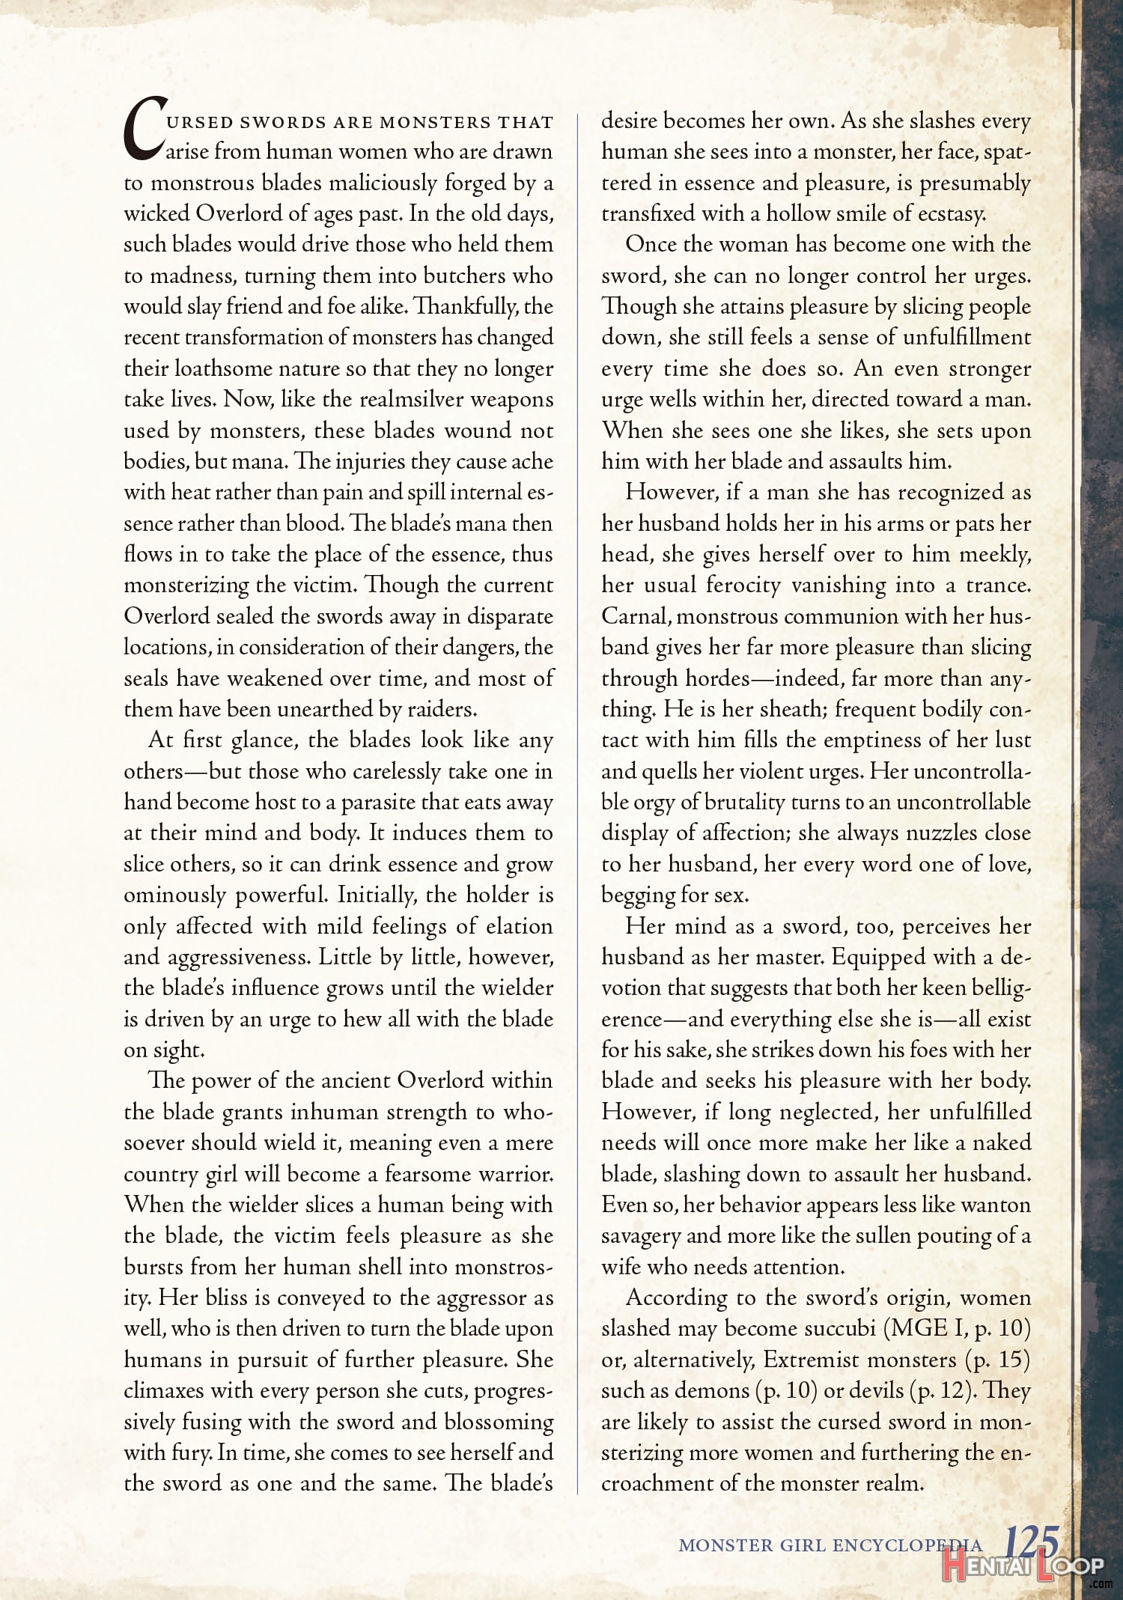 Monster Girl Encyclopedia Vol. 2 page 126